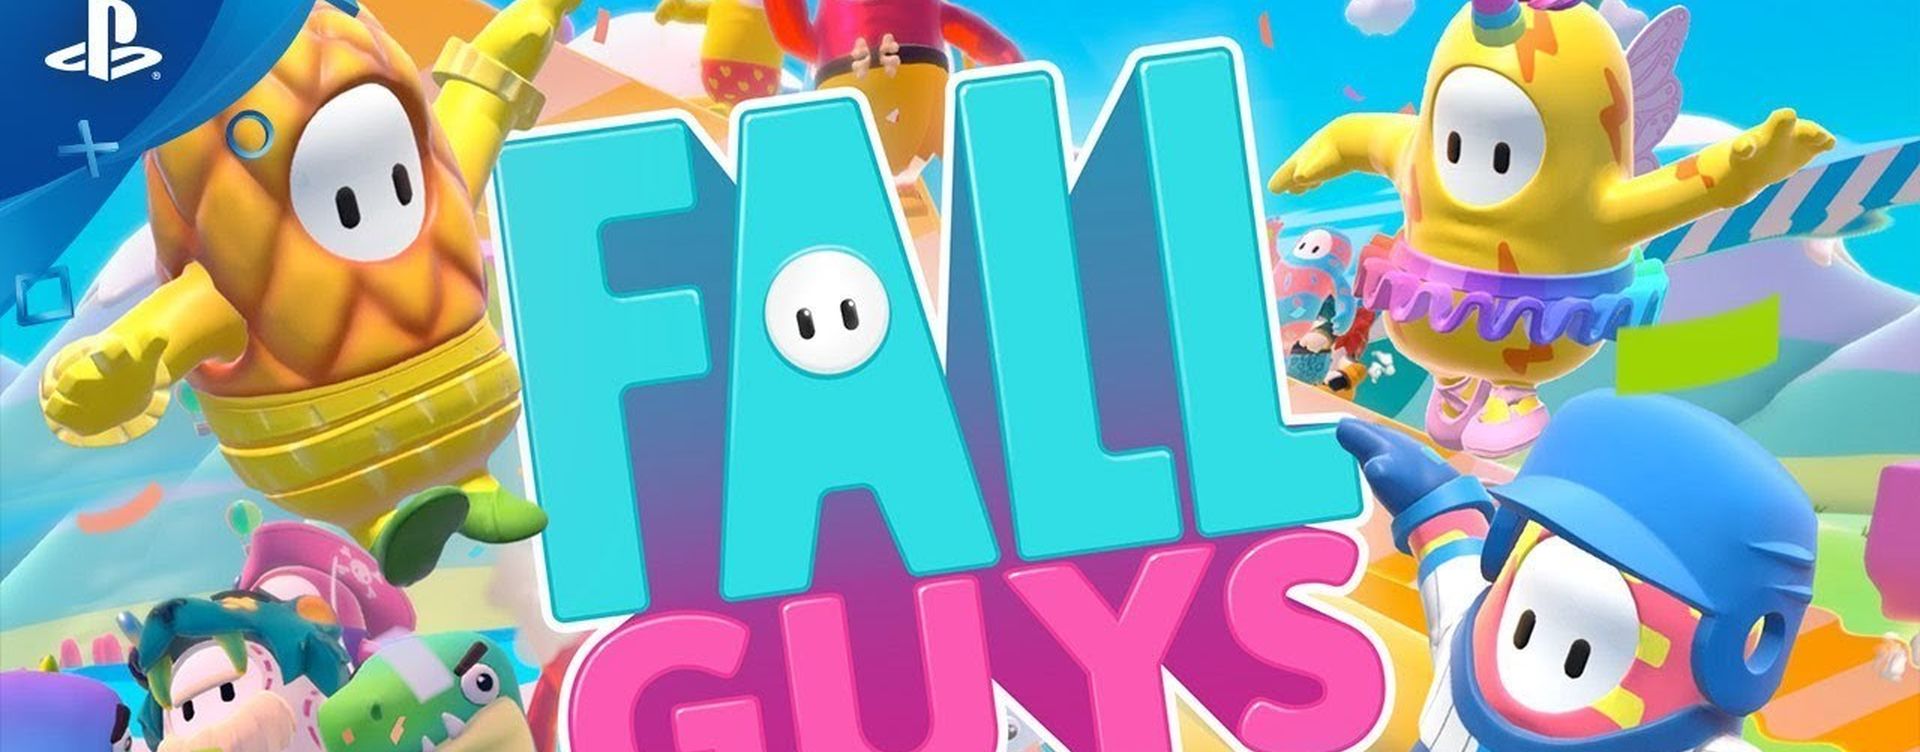 Fall Guys: pasos para jugar Fall Guys gratis en PlayStation 4, PS Plus, Consolas, PlayStation, DEPOR-PLAY